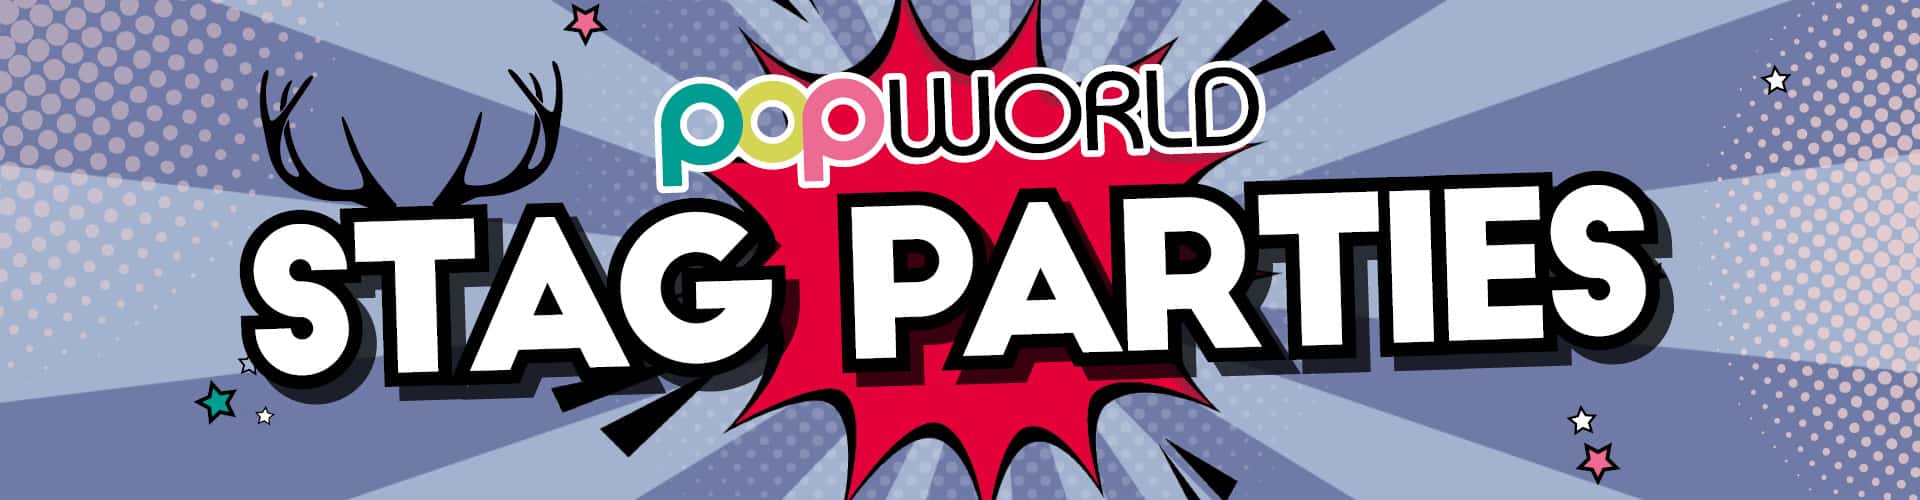 Stag Parties at Popworld and Zinc Redditch